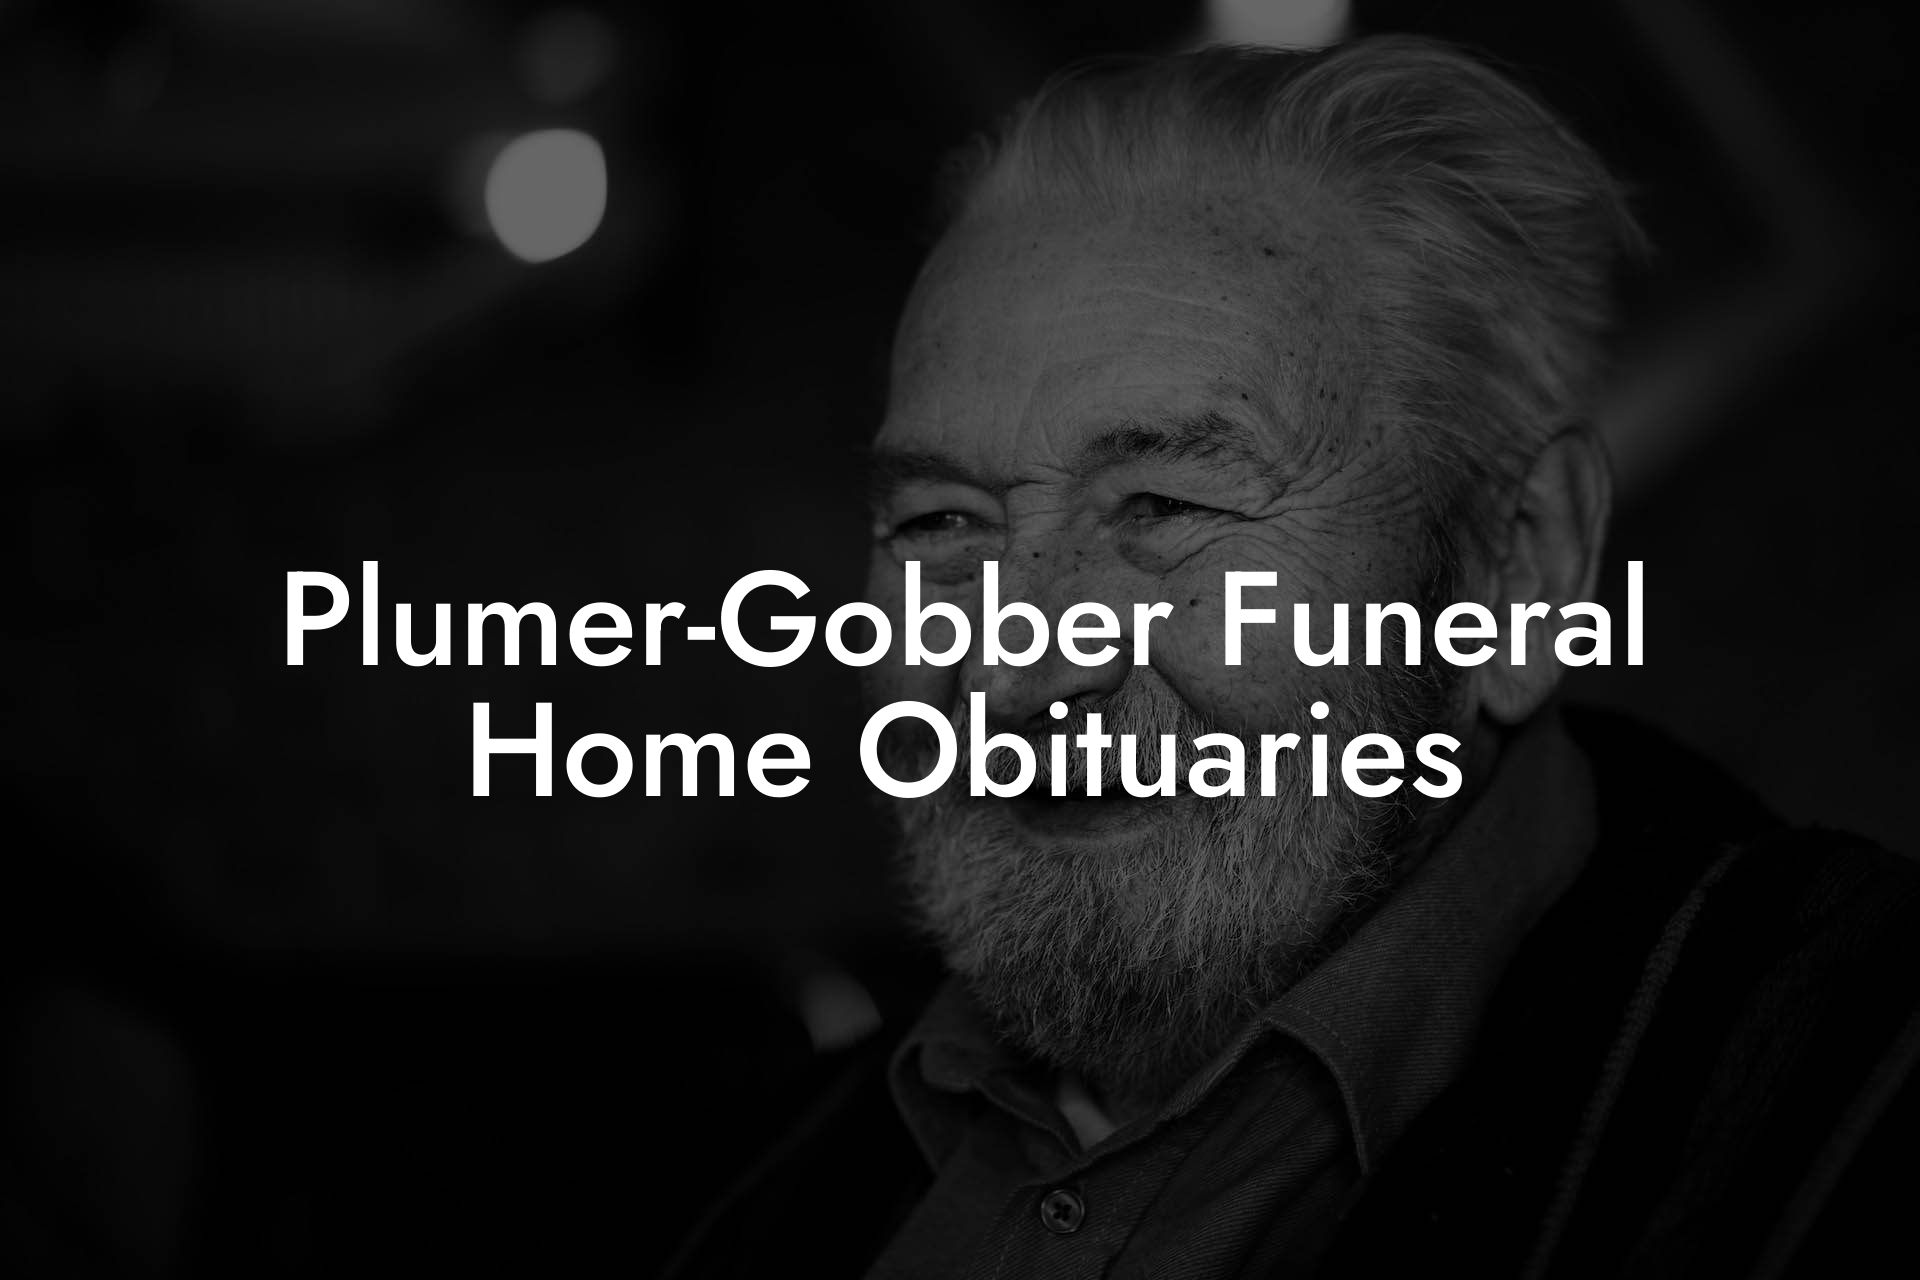 Plumer-Gobber Funeral Home Obituaries